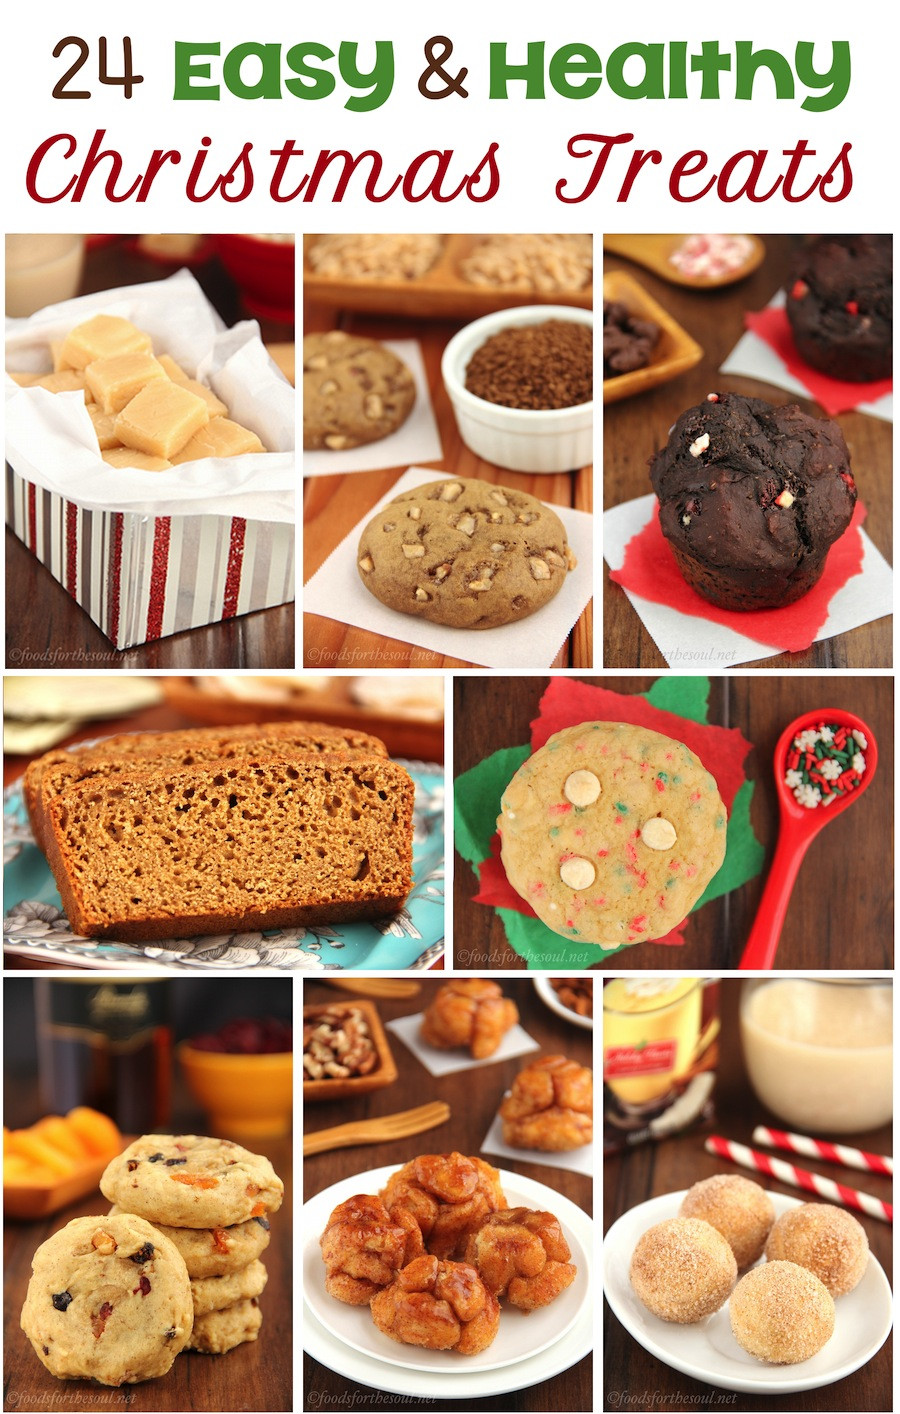 Healthy Christmas Baking
 24 Easy & Healthy Christmas Treats